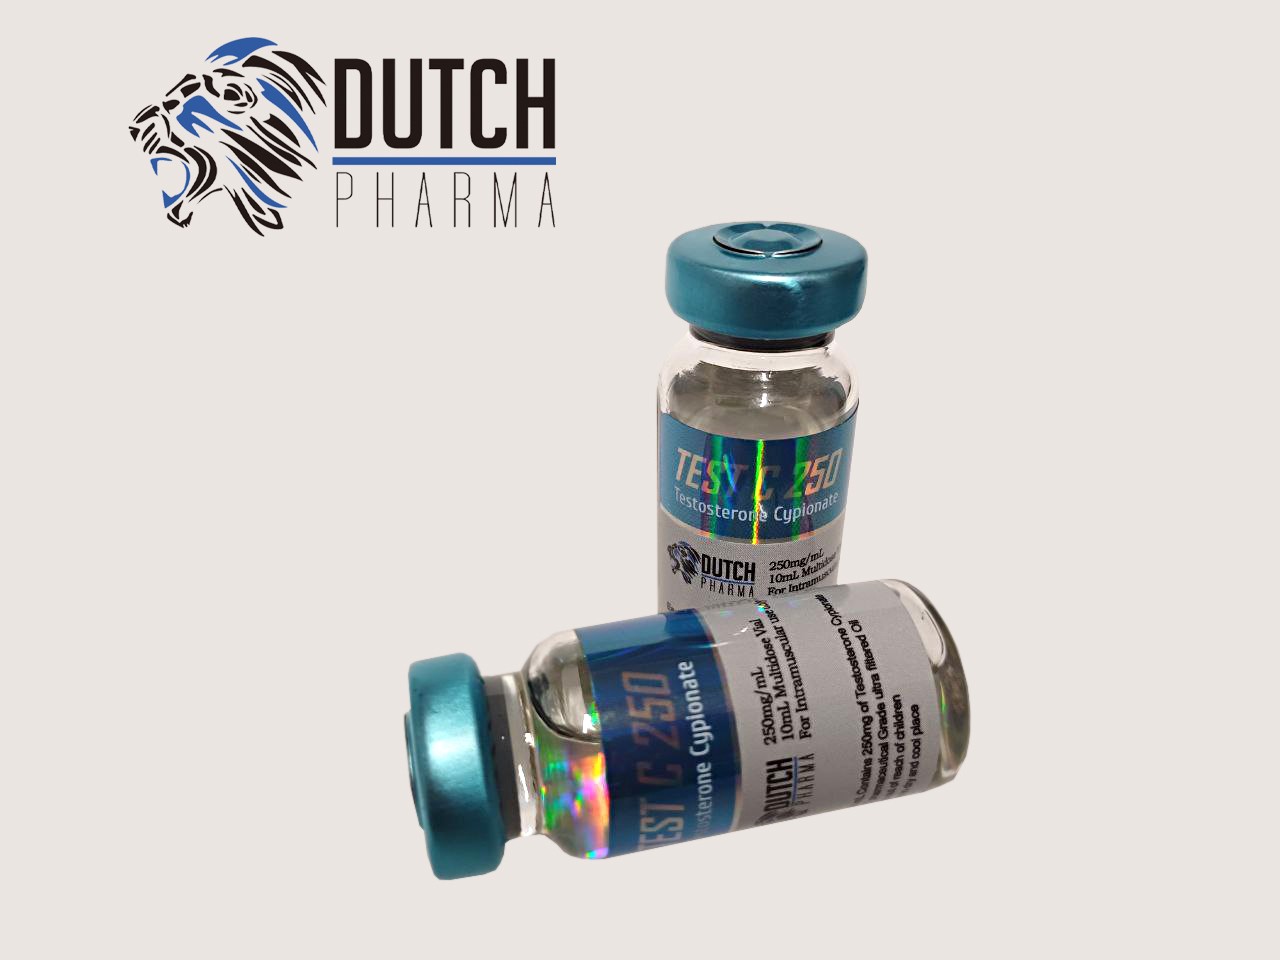 TEST C 250 Dutch Pharma